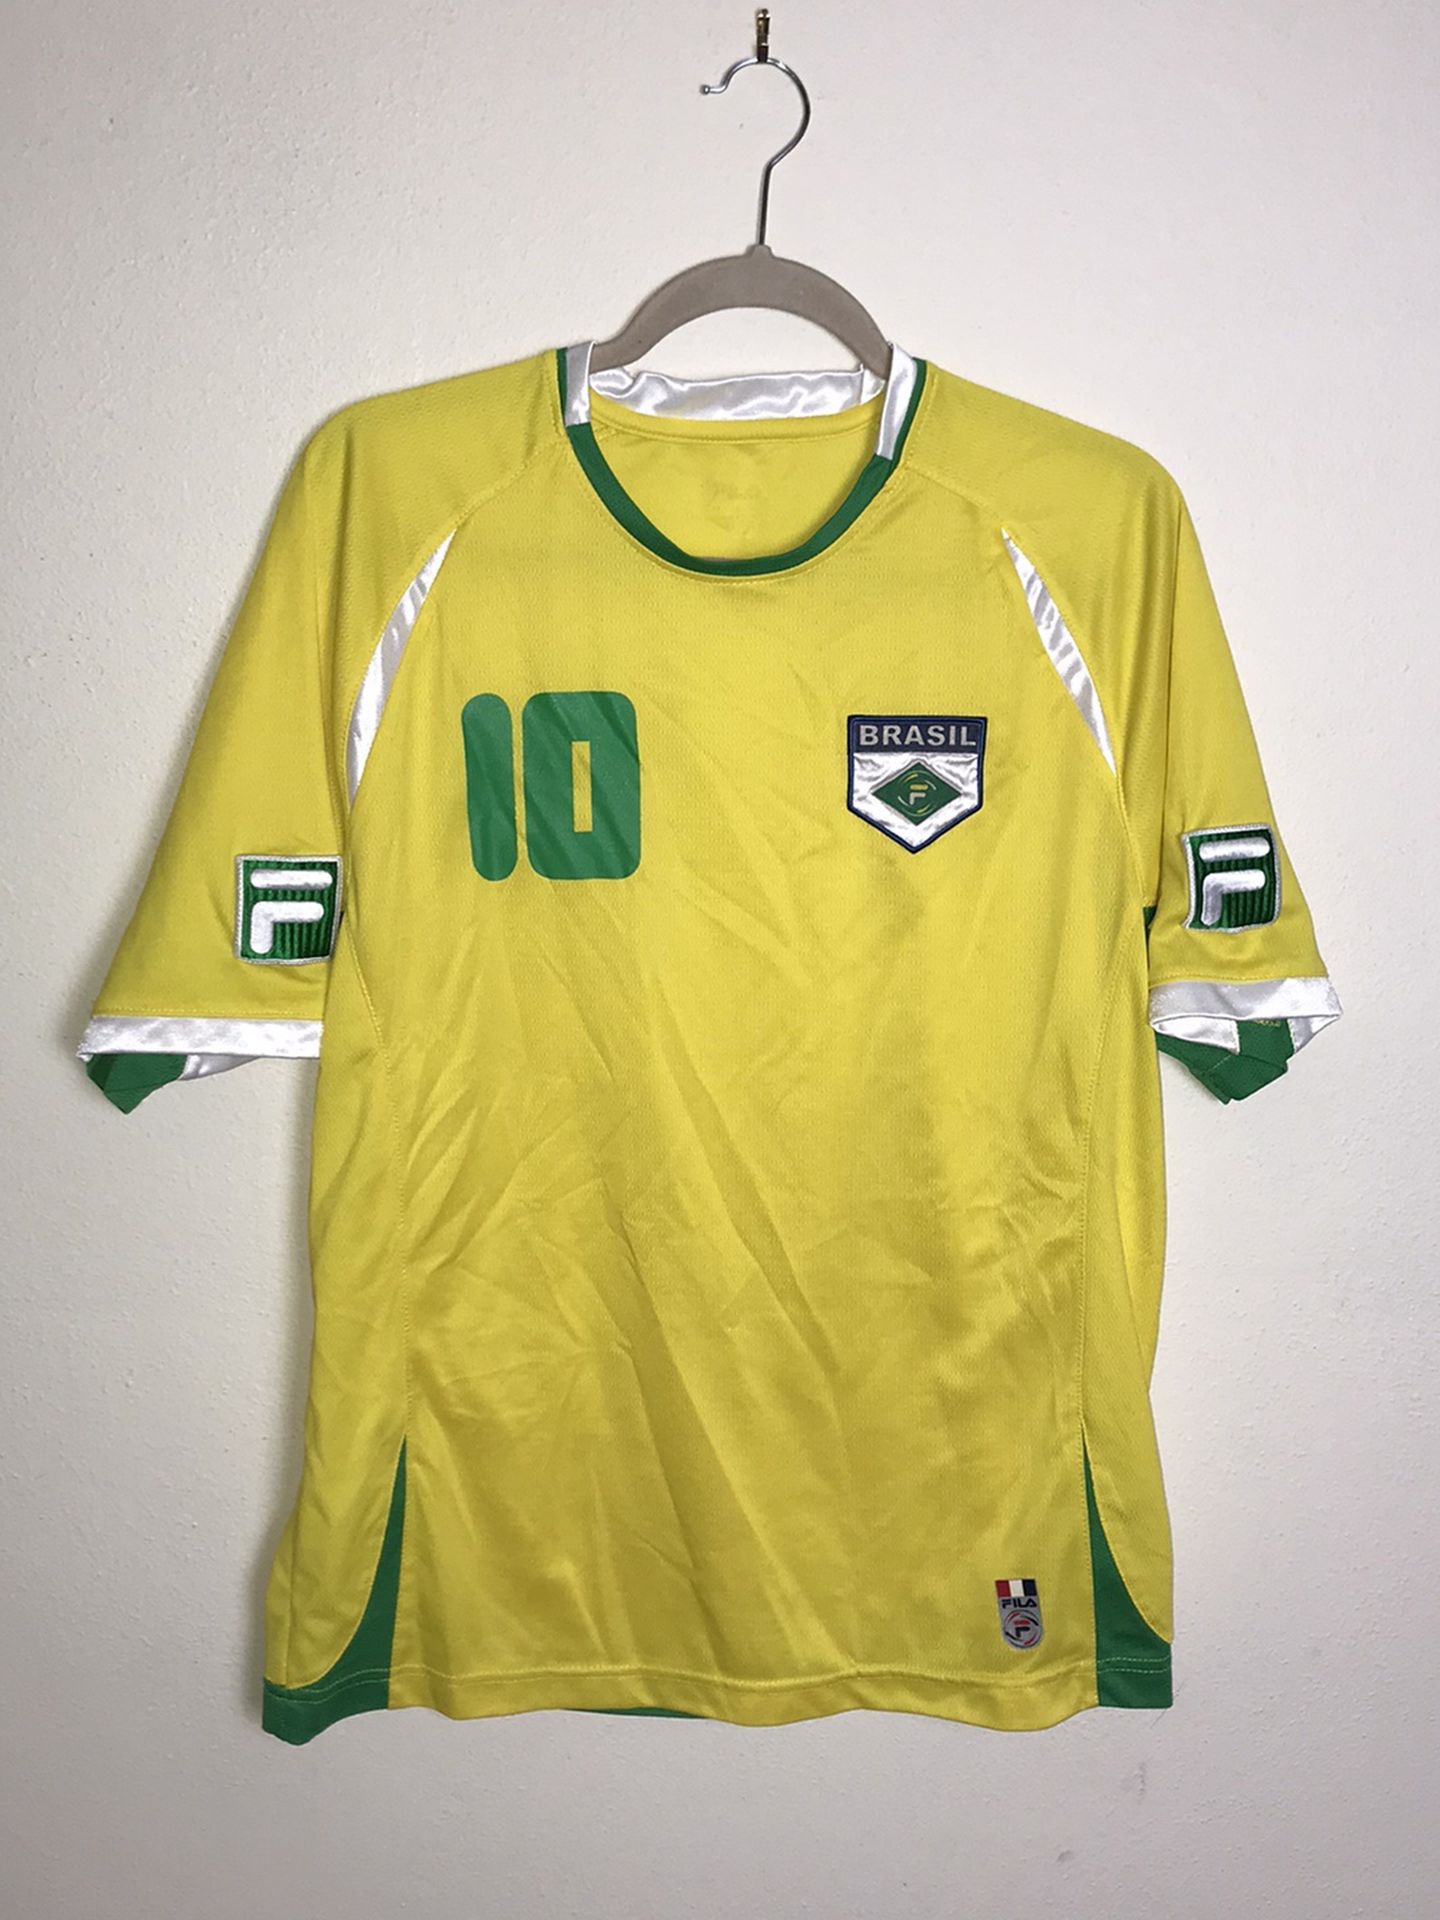 Fila Brazil DROGBA BARCELONA No. 10 Soccer (Medium) Jersey